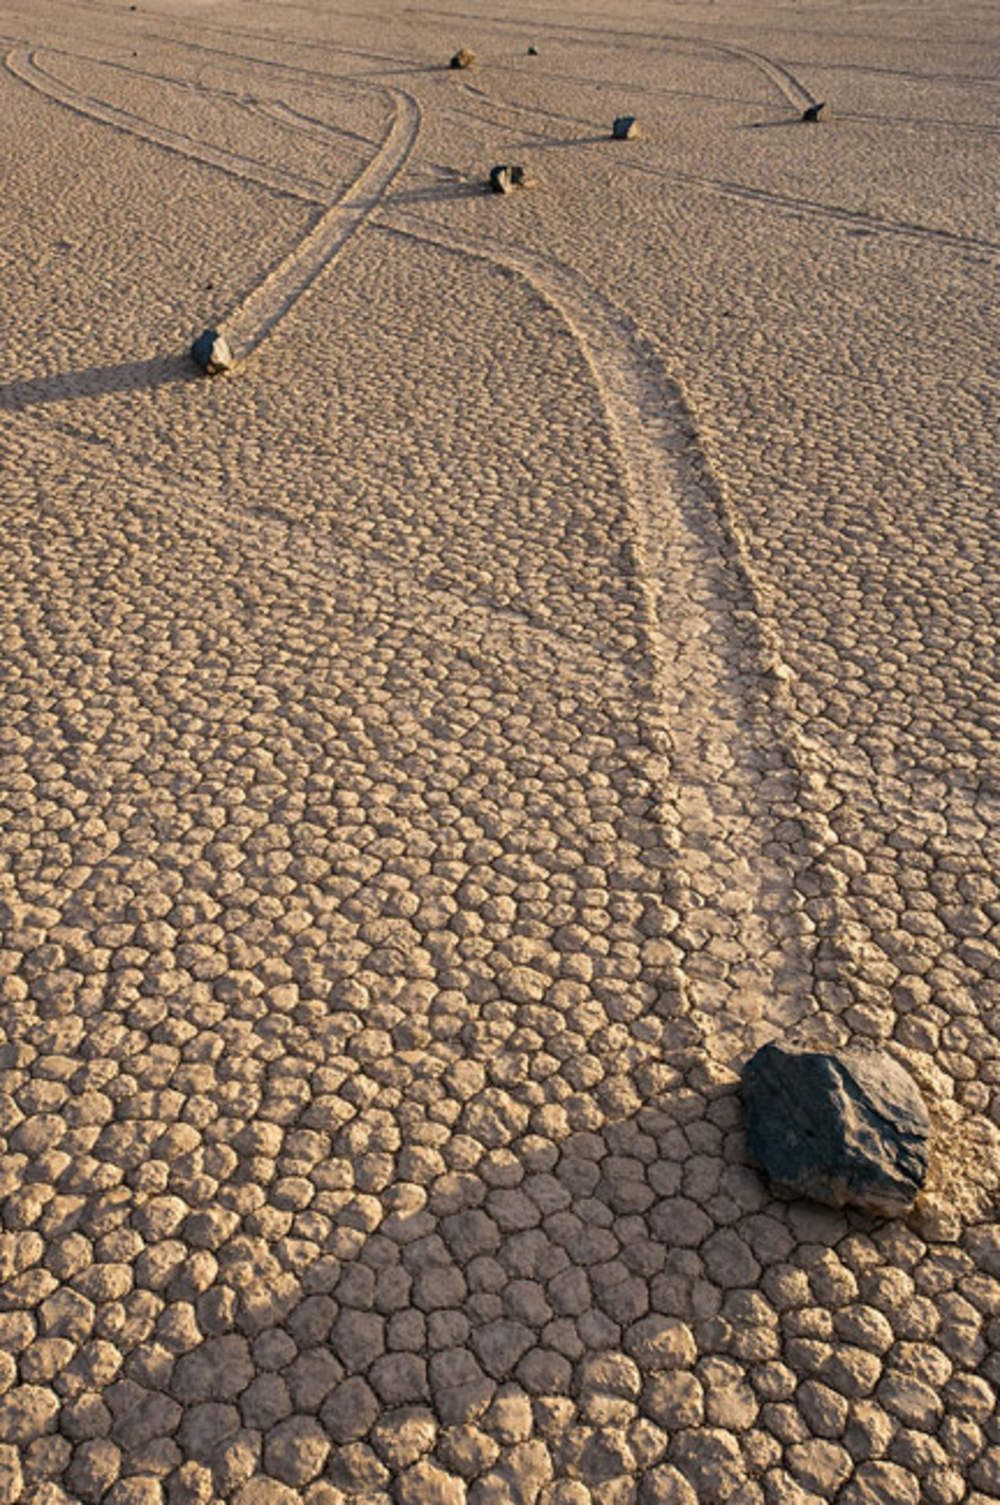 Racetrack Playa, Death Valley, Kalifornia